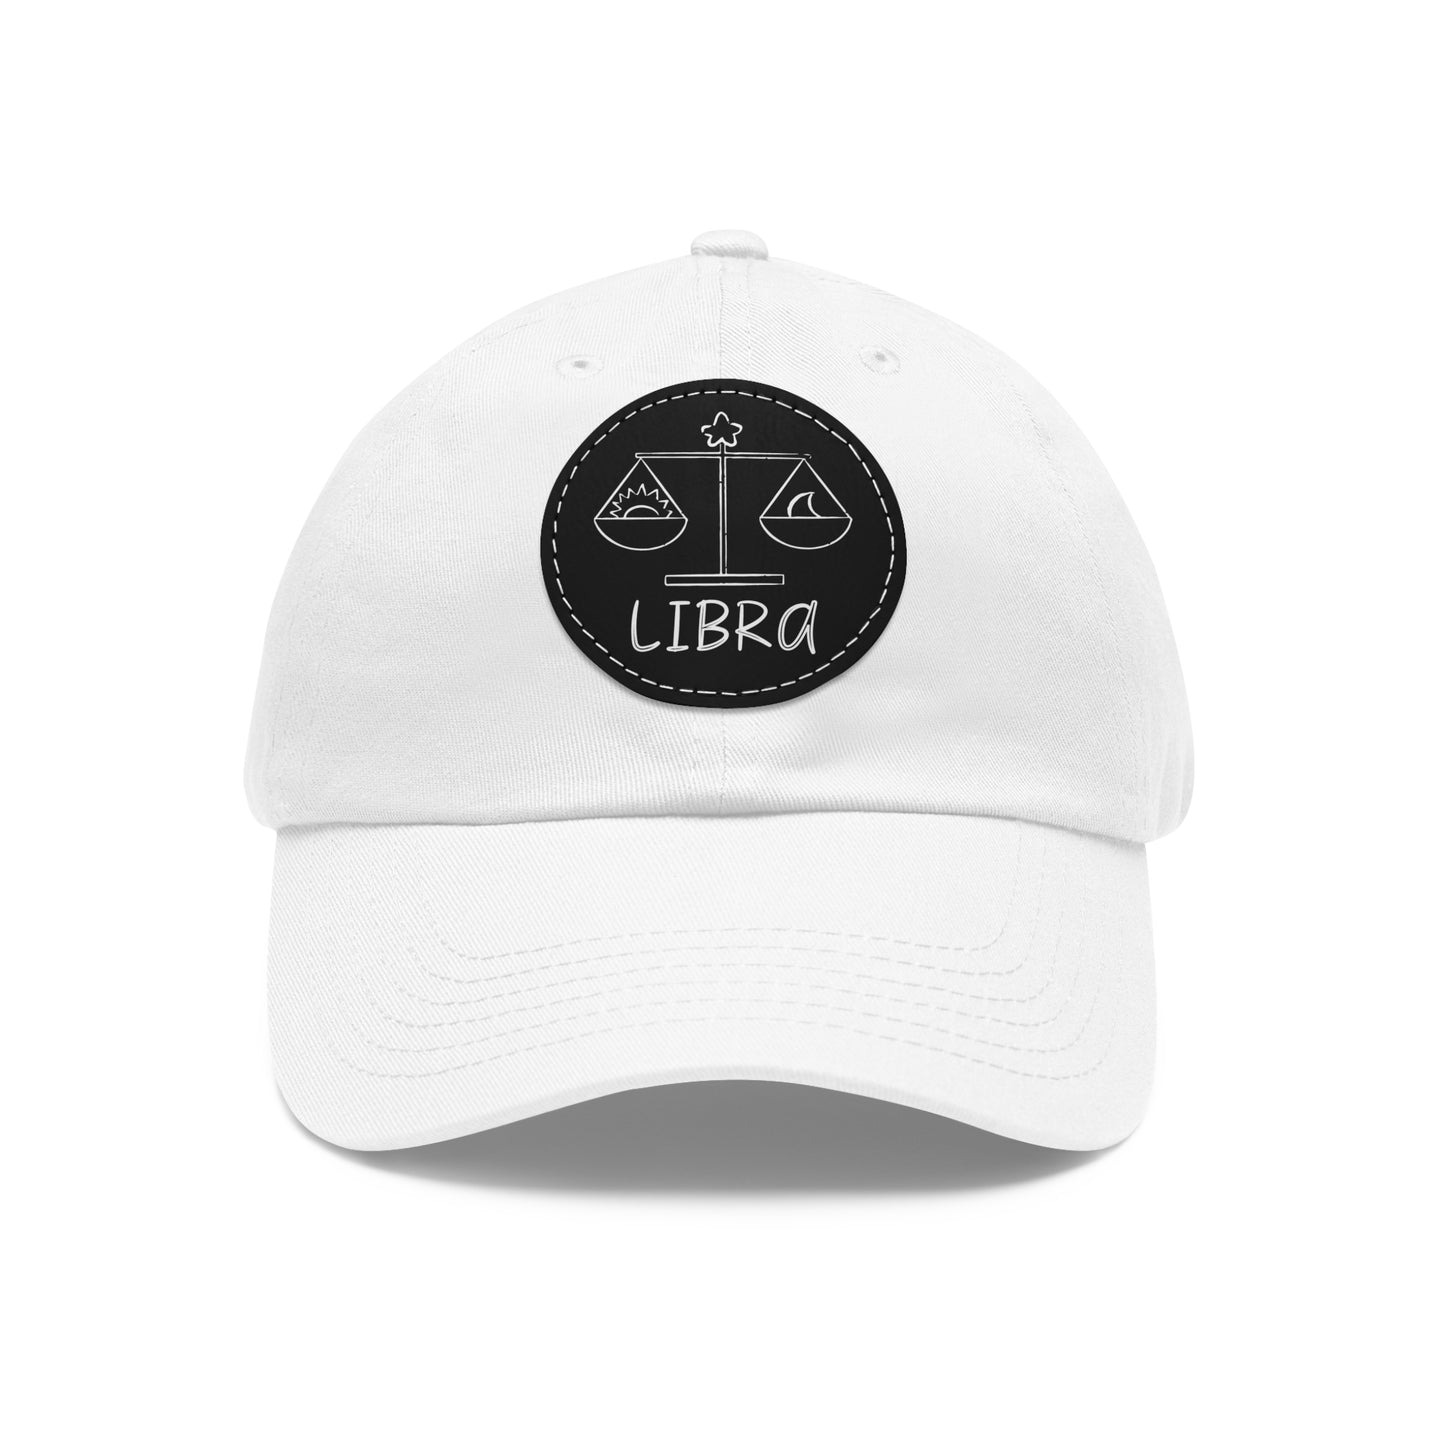 Cute Libra Hat, Vegan Leather Patch